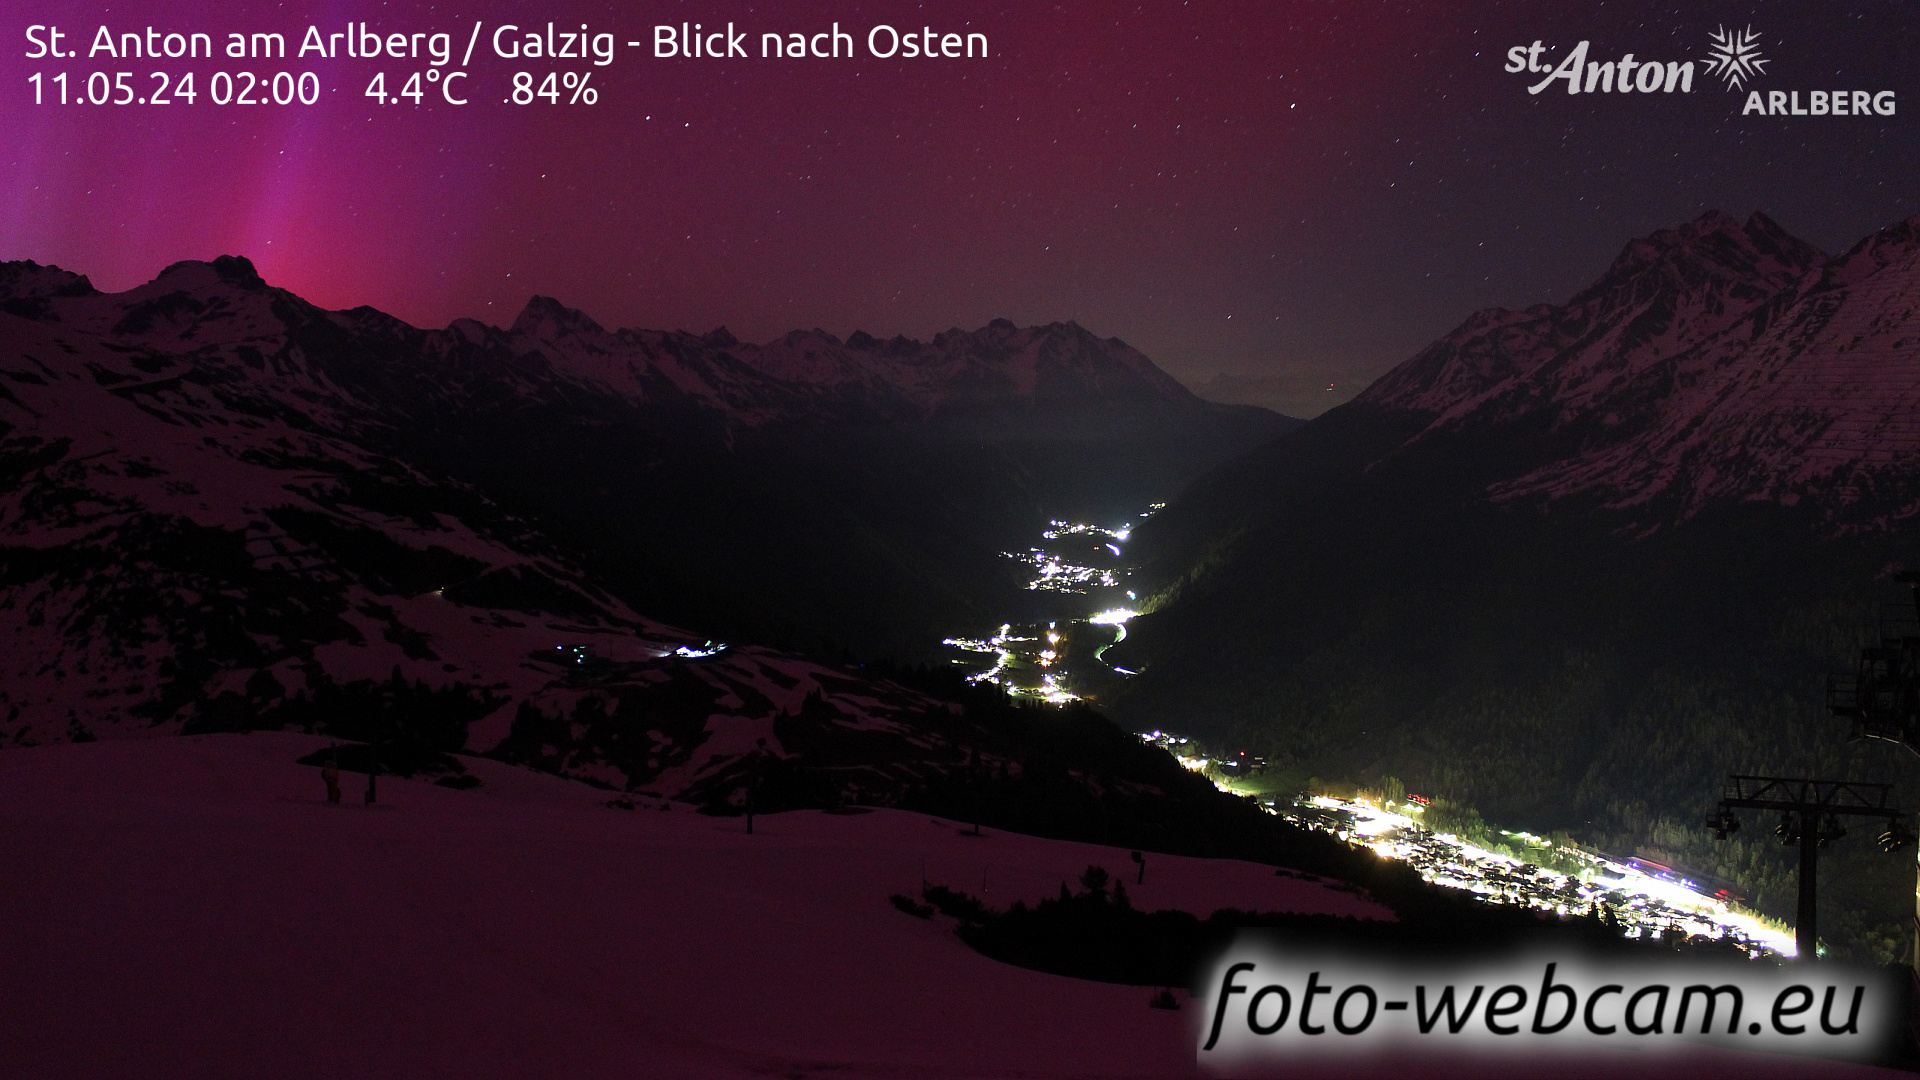 St. Anton am Arlberg So. 02:01